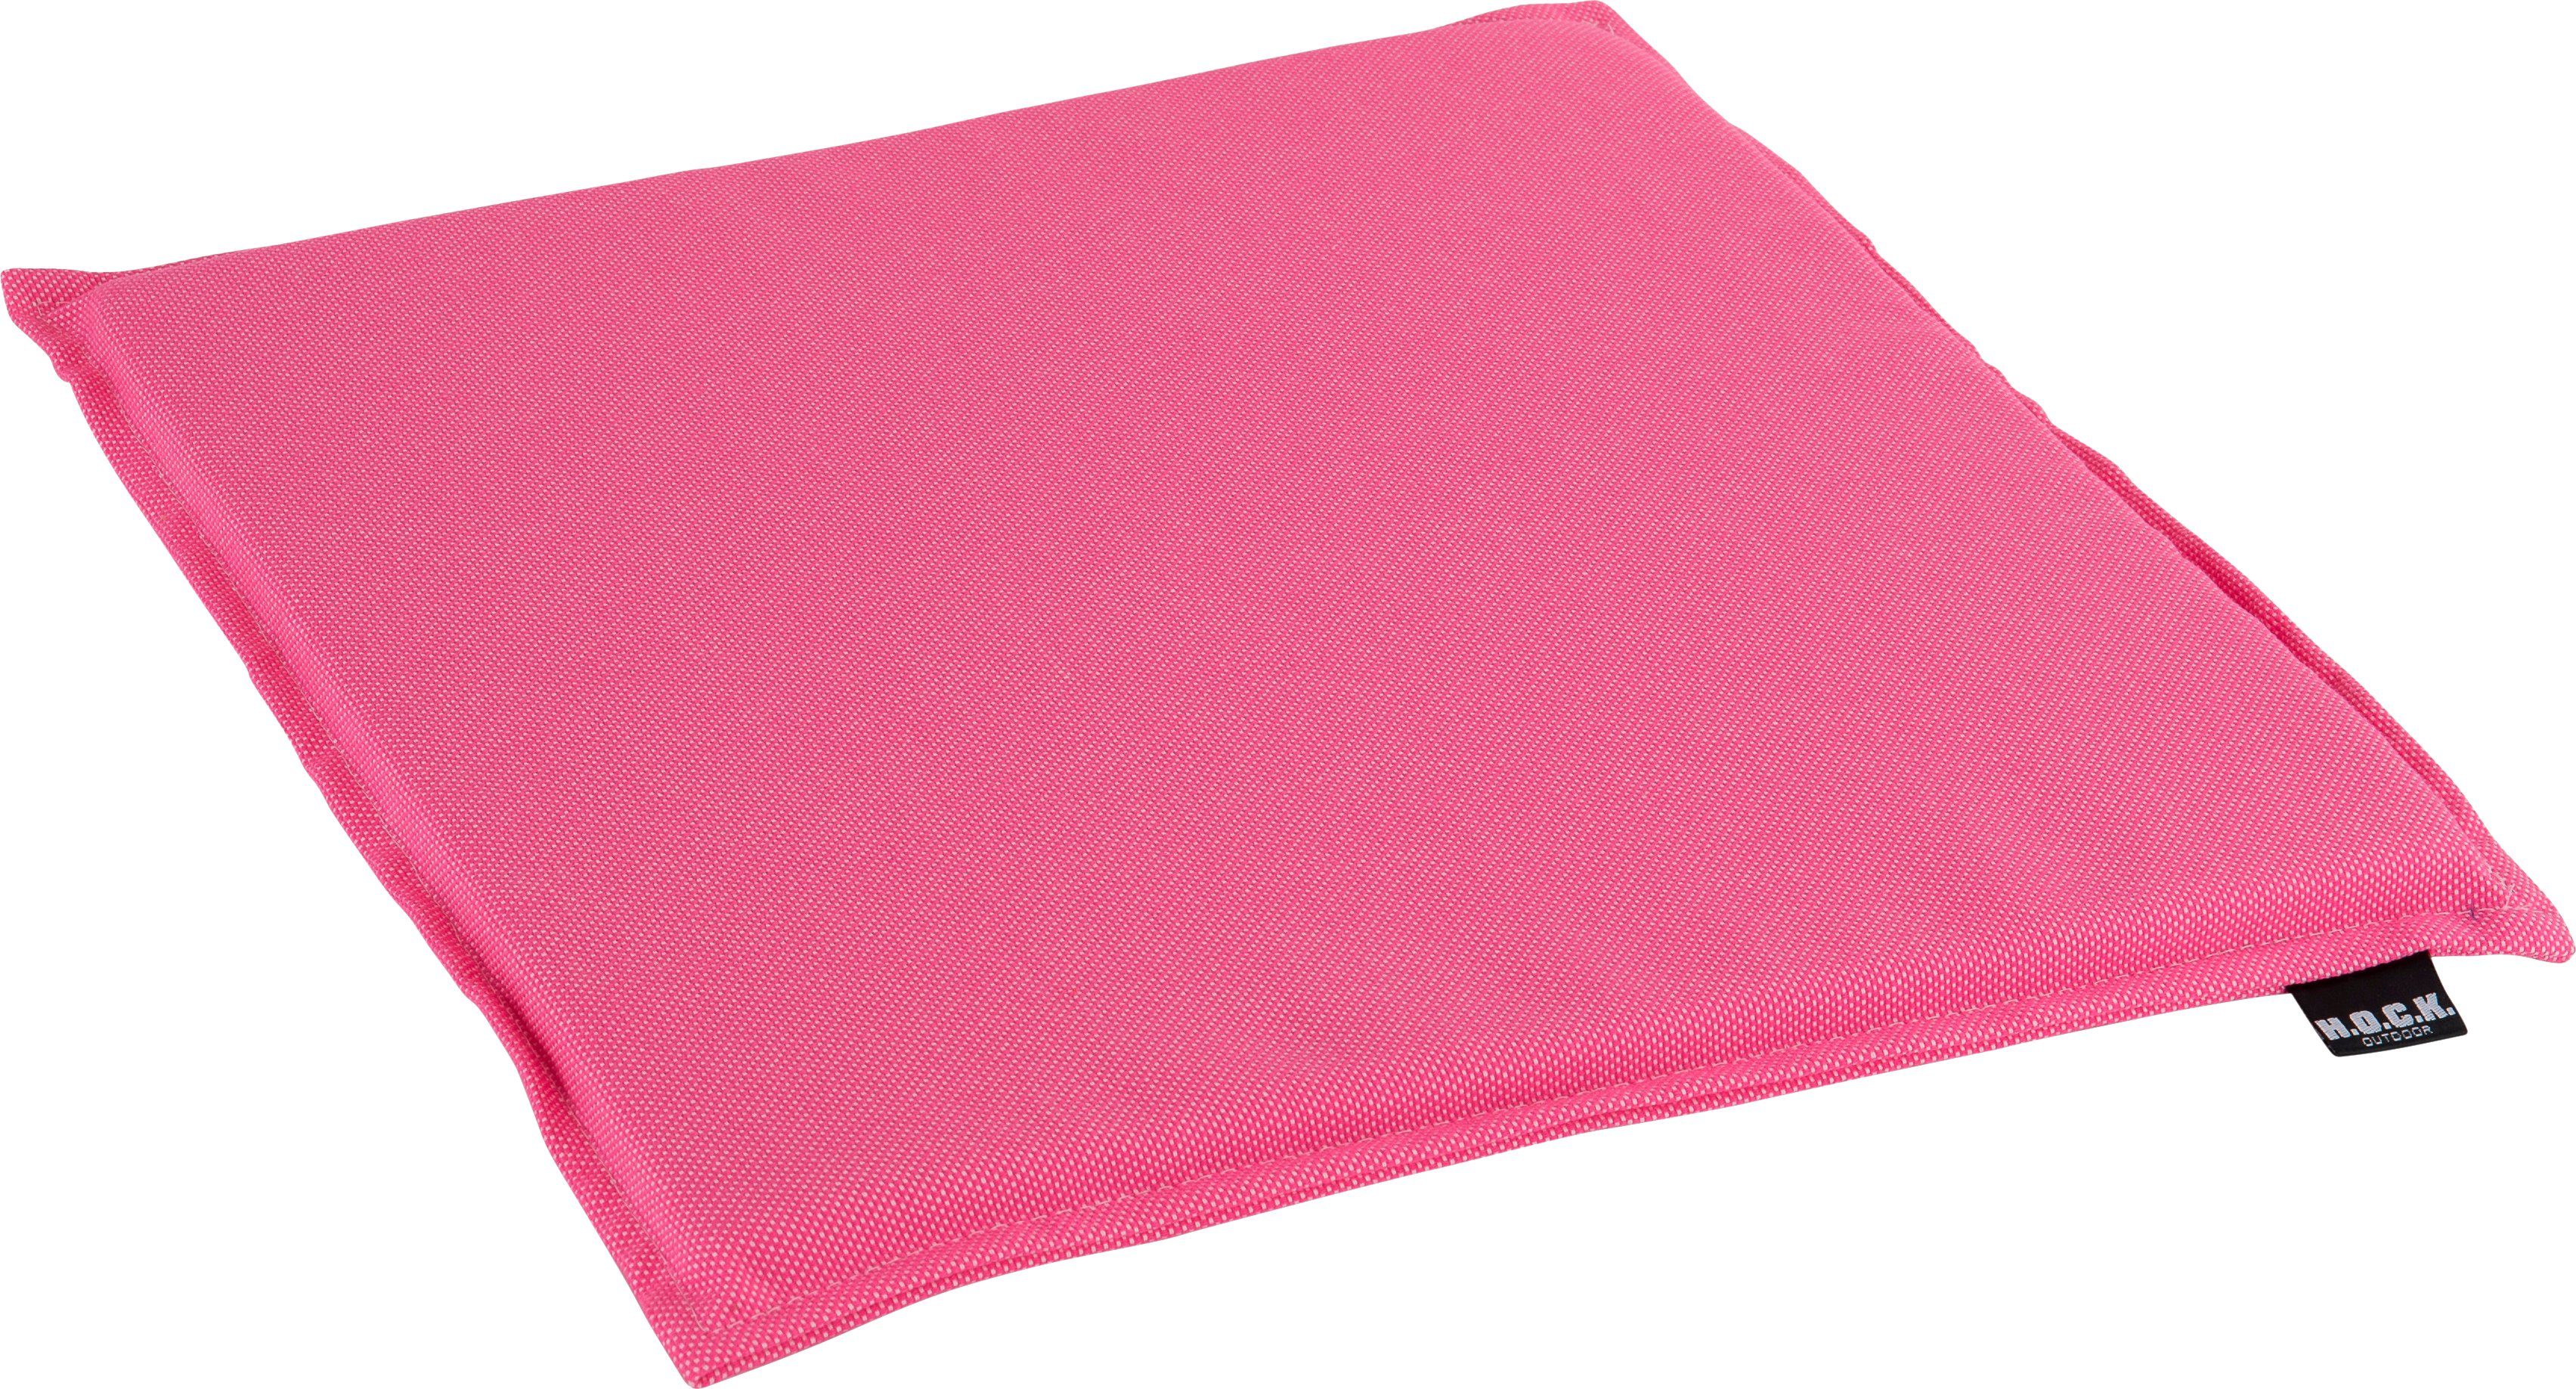 2cm, 2cm Outdoor Kissenhöhe geeignet - H.O.C.K. pink Sitzkissen Caribe